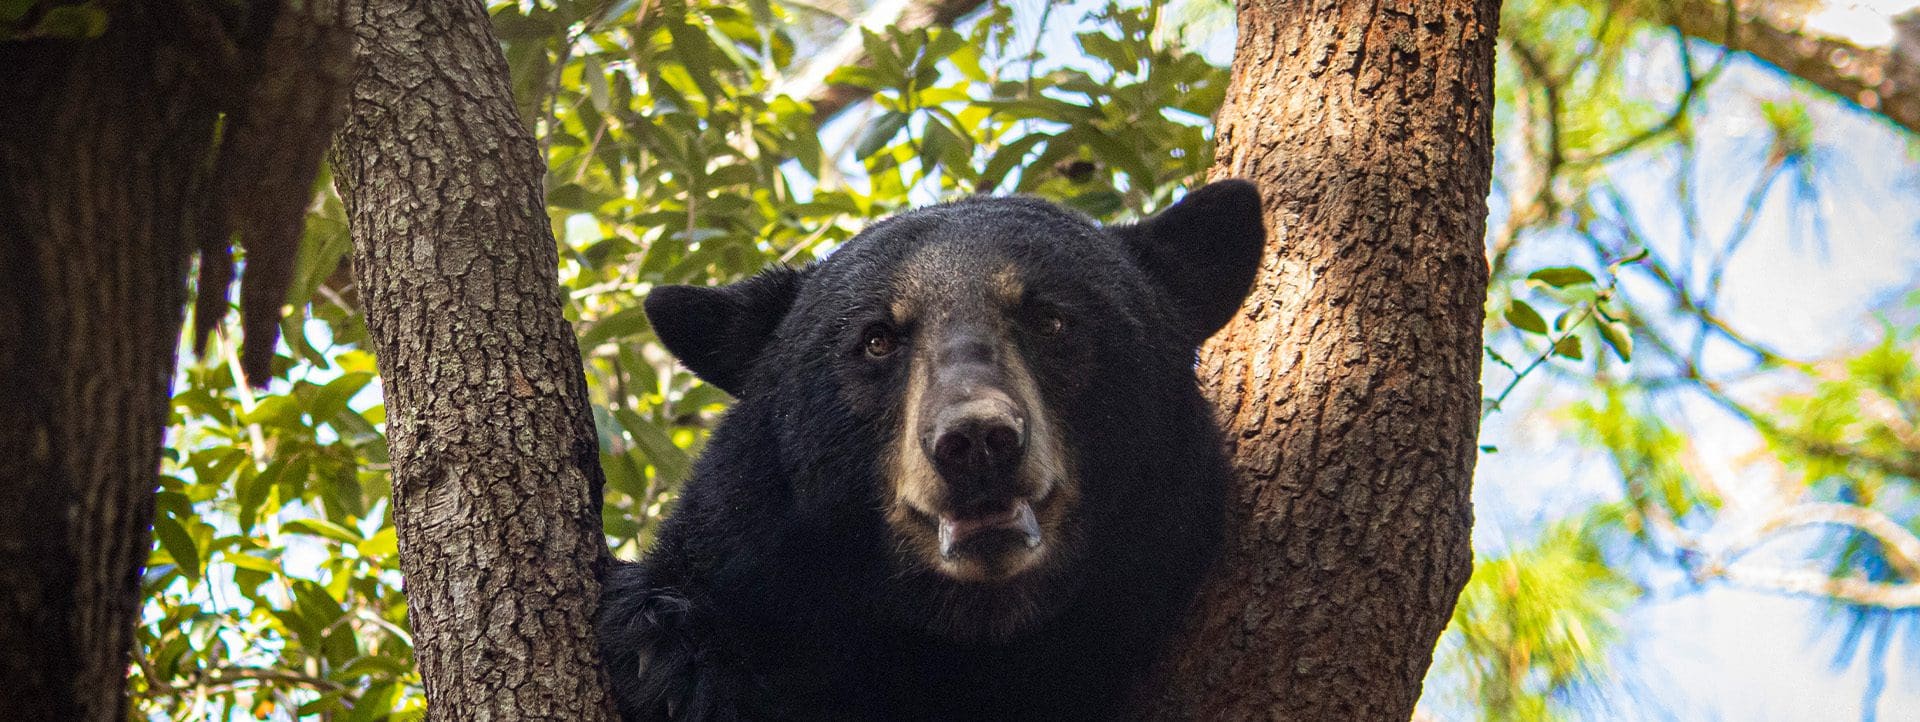 Florida Black Bear in a tree.